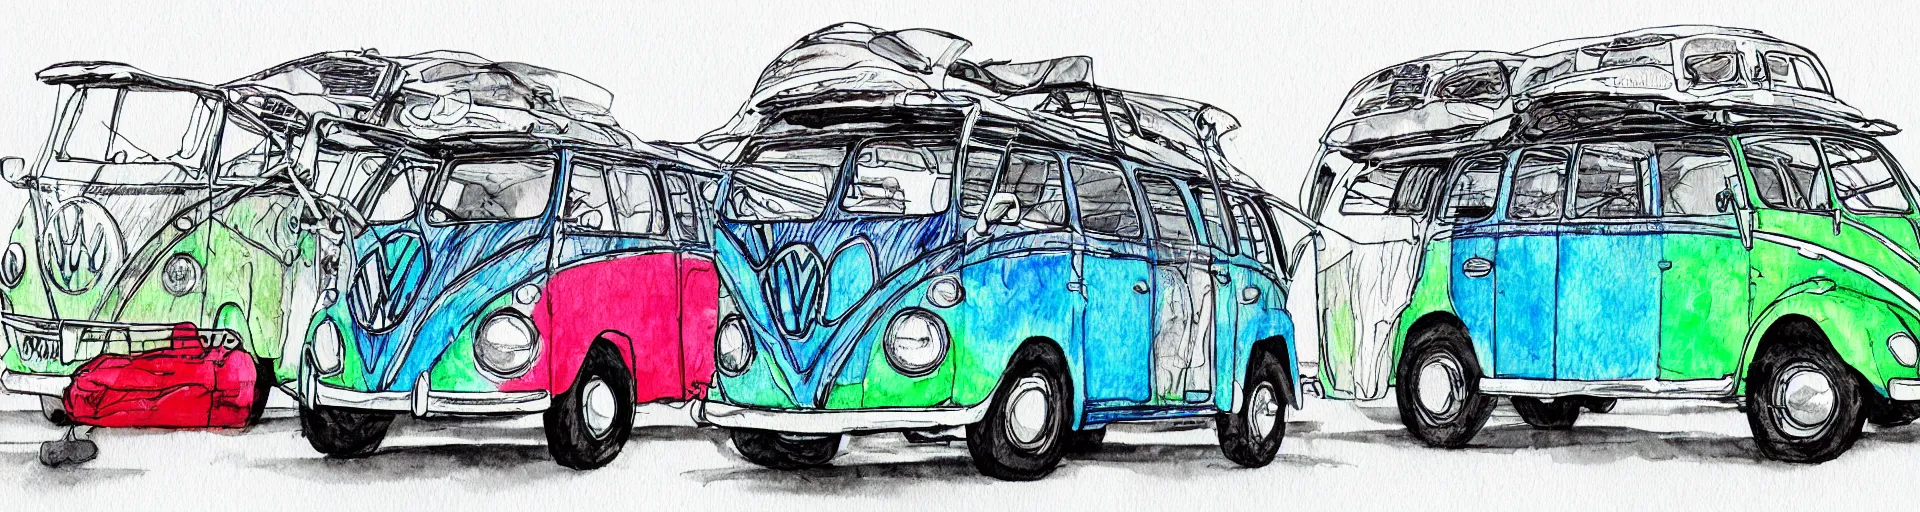 Image similar to vw bus, vw beetle, on a street, centered award winning watercolor pen illustration